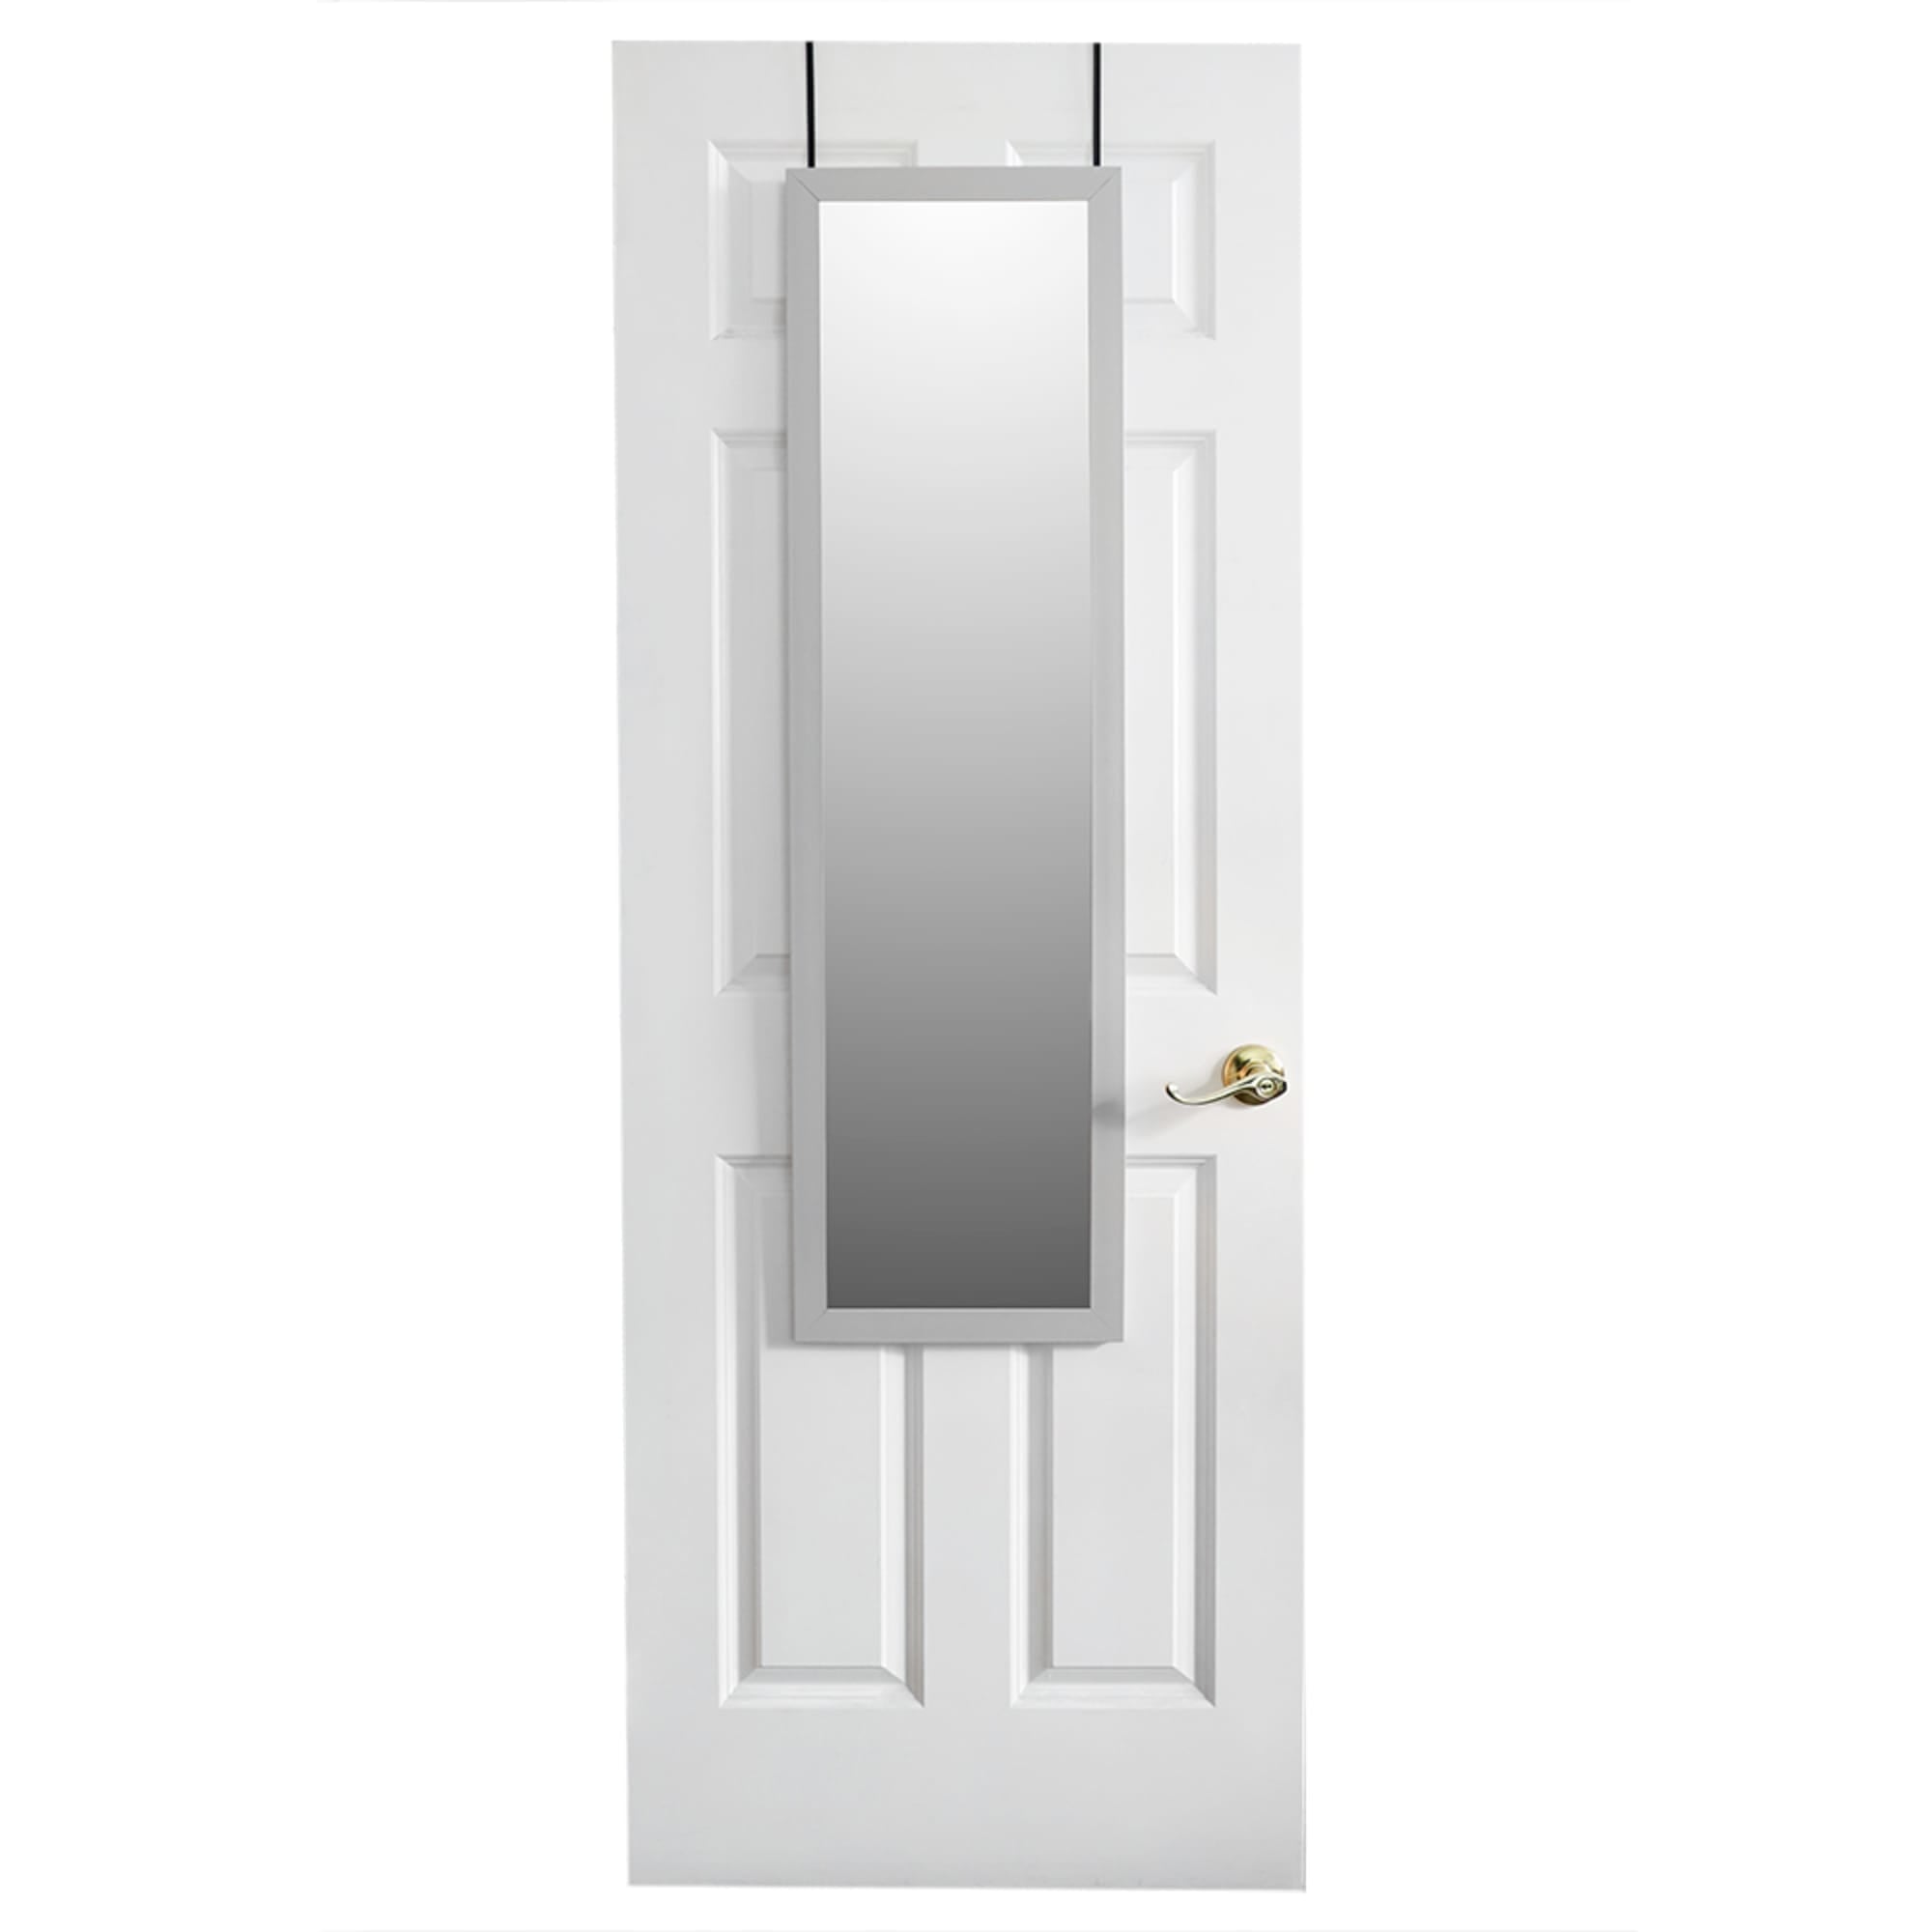 Home Basics Framed MDF Over the Door Mirror, Grey $20.00 EACH, CASE PACK OF 6